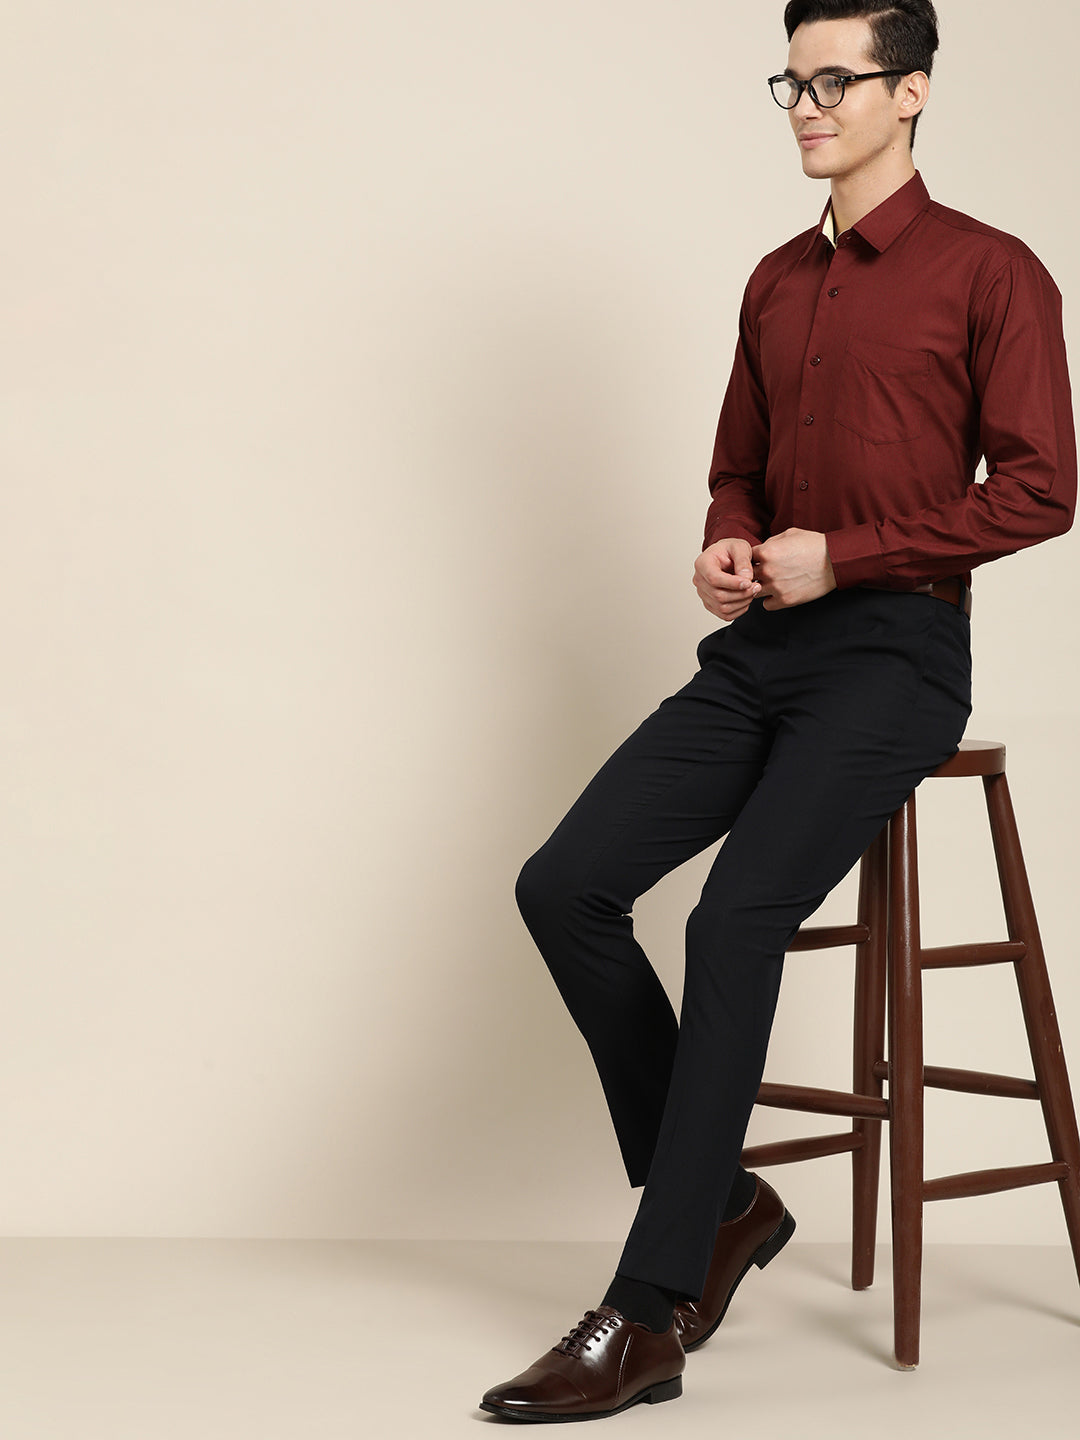 Black short pants, maroon shirt, tan blazer, tan and black flats | Maroon  shirts, Tan blazer, Plus size fashion